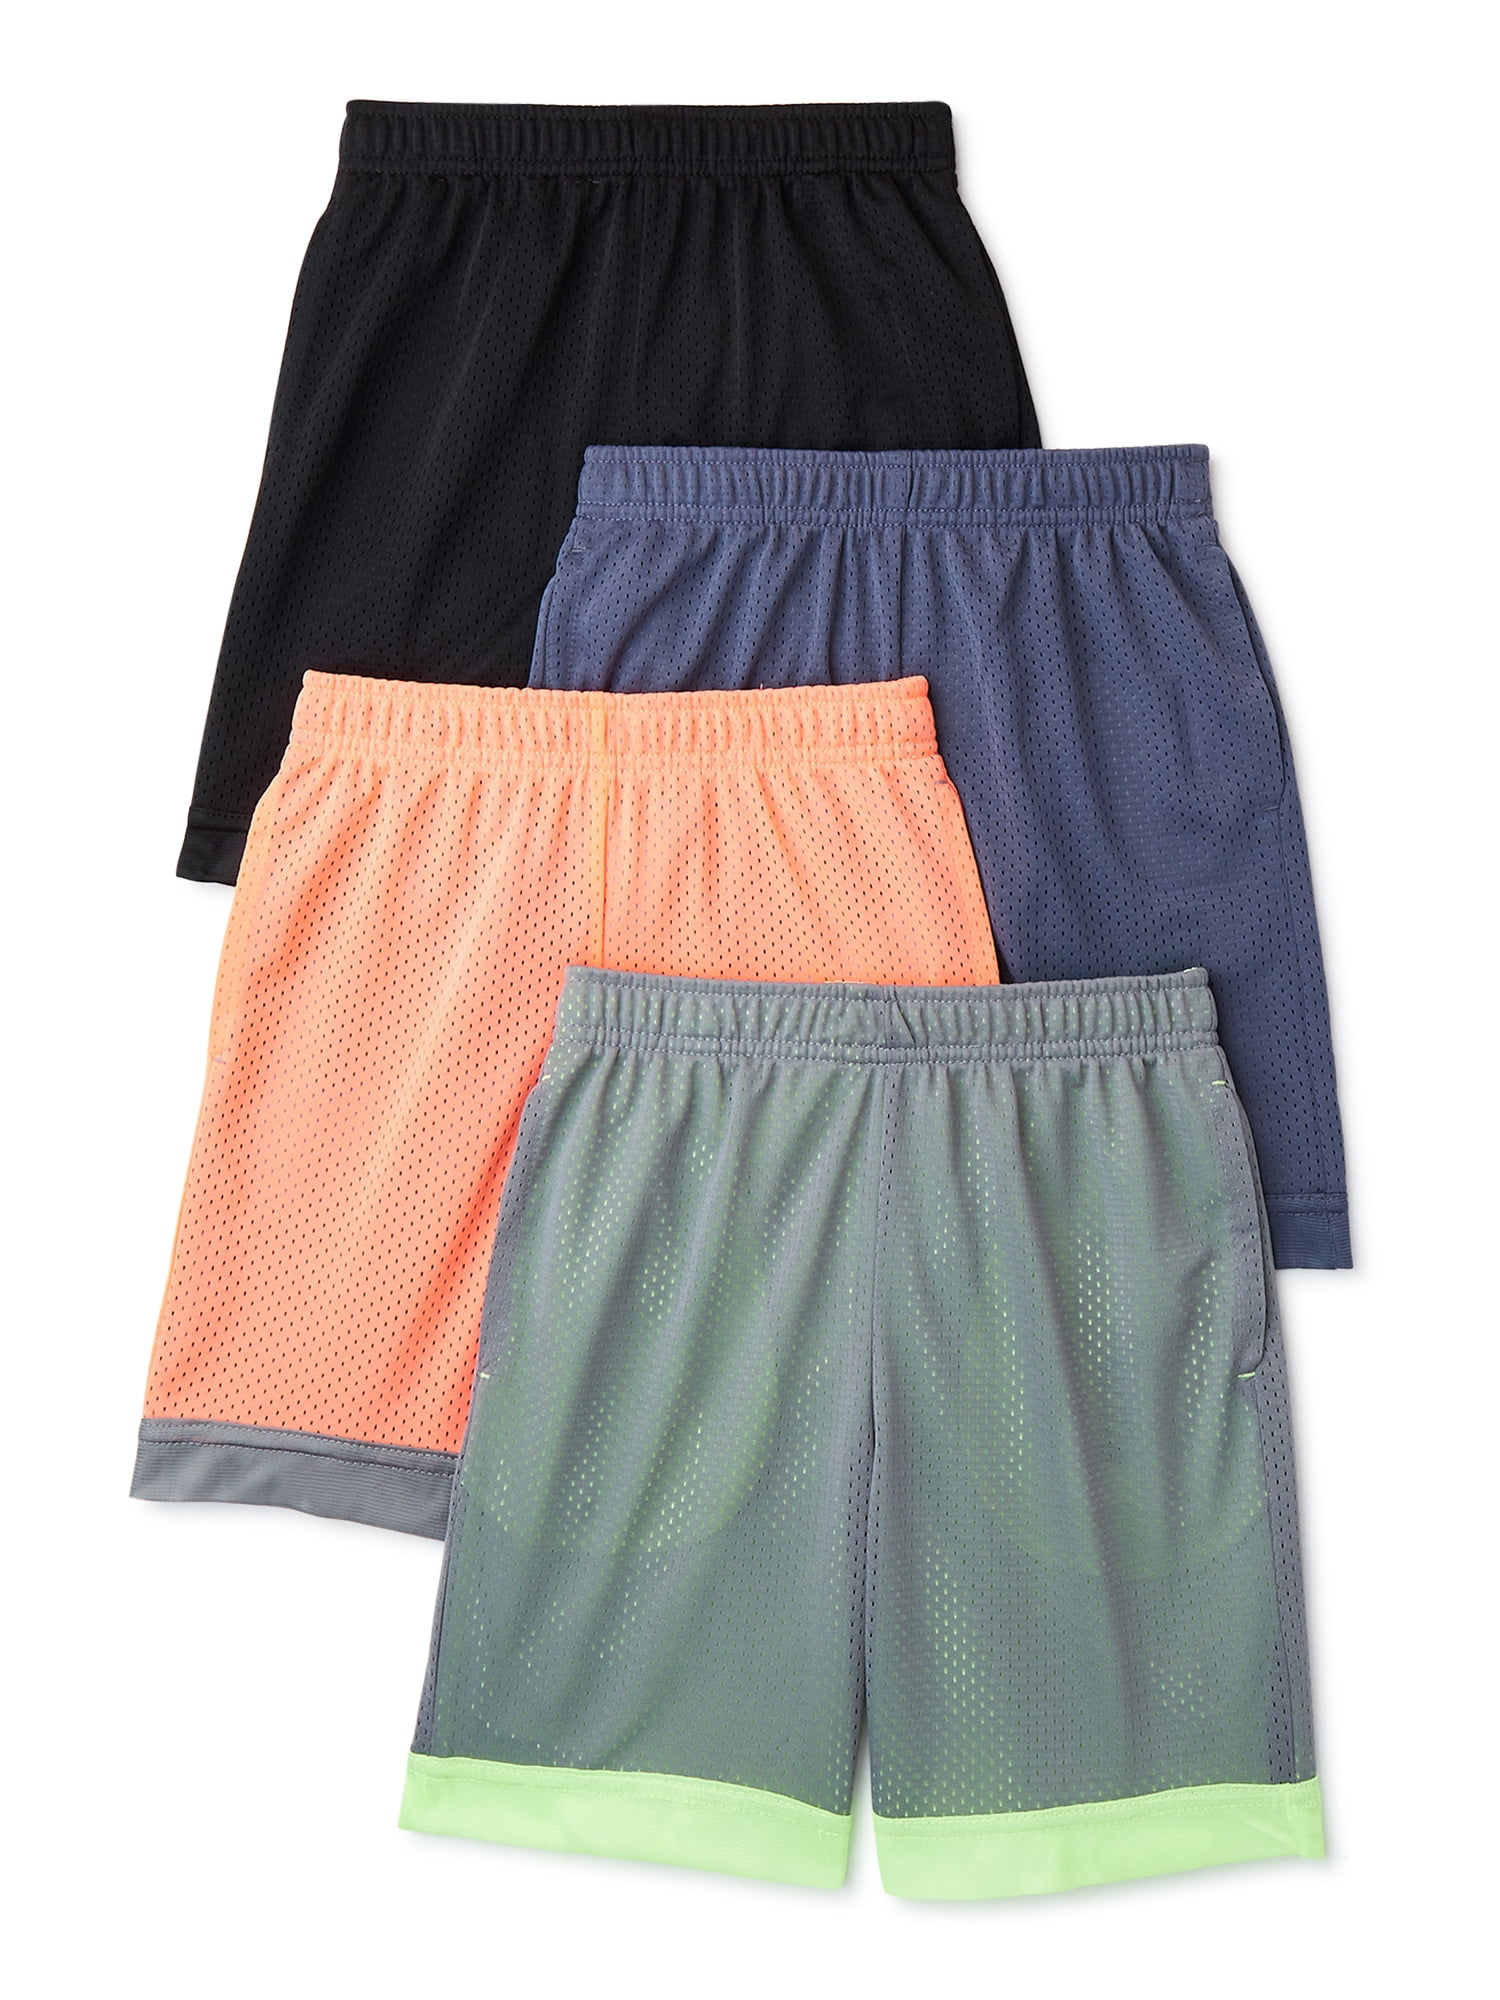 Athletic Works Boys Mesh Shorts, 4-Pack, Sizes 4-18 & Husky - Walmart.com